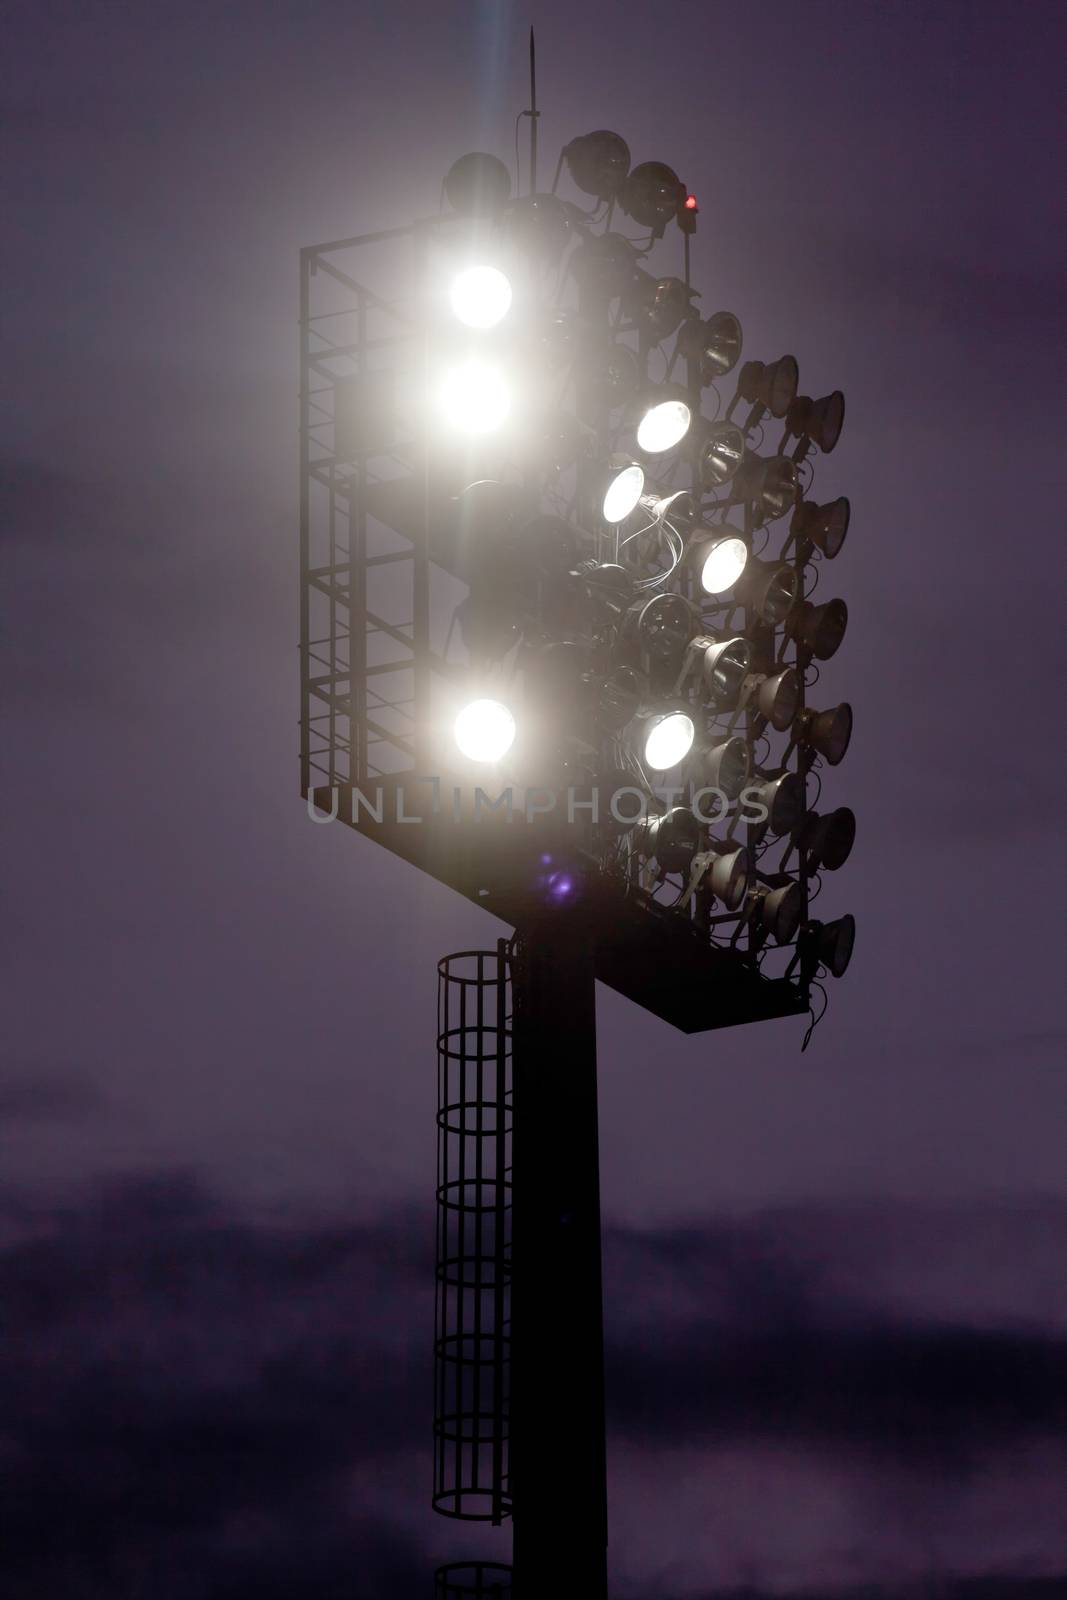 Stadium lights against dark night sky background